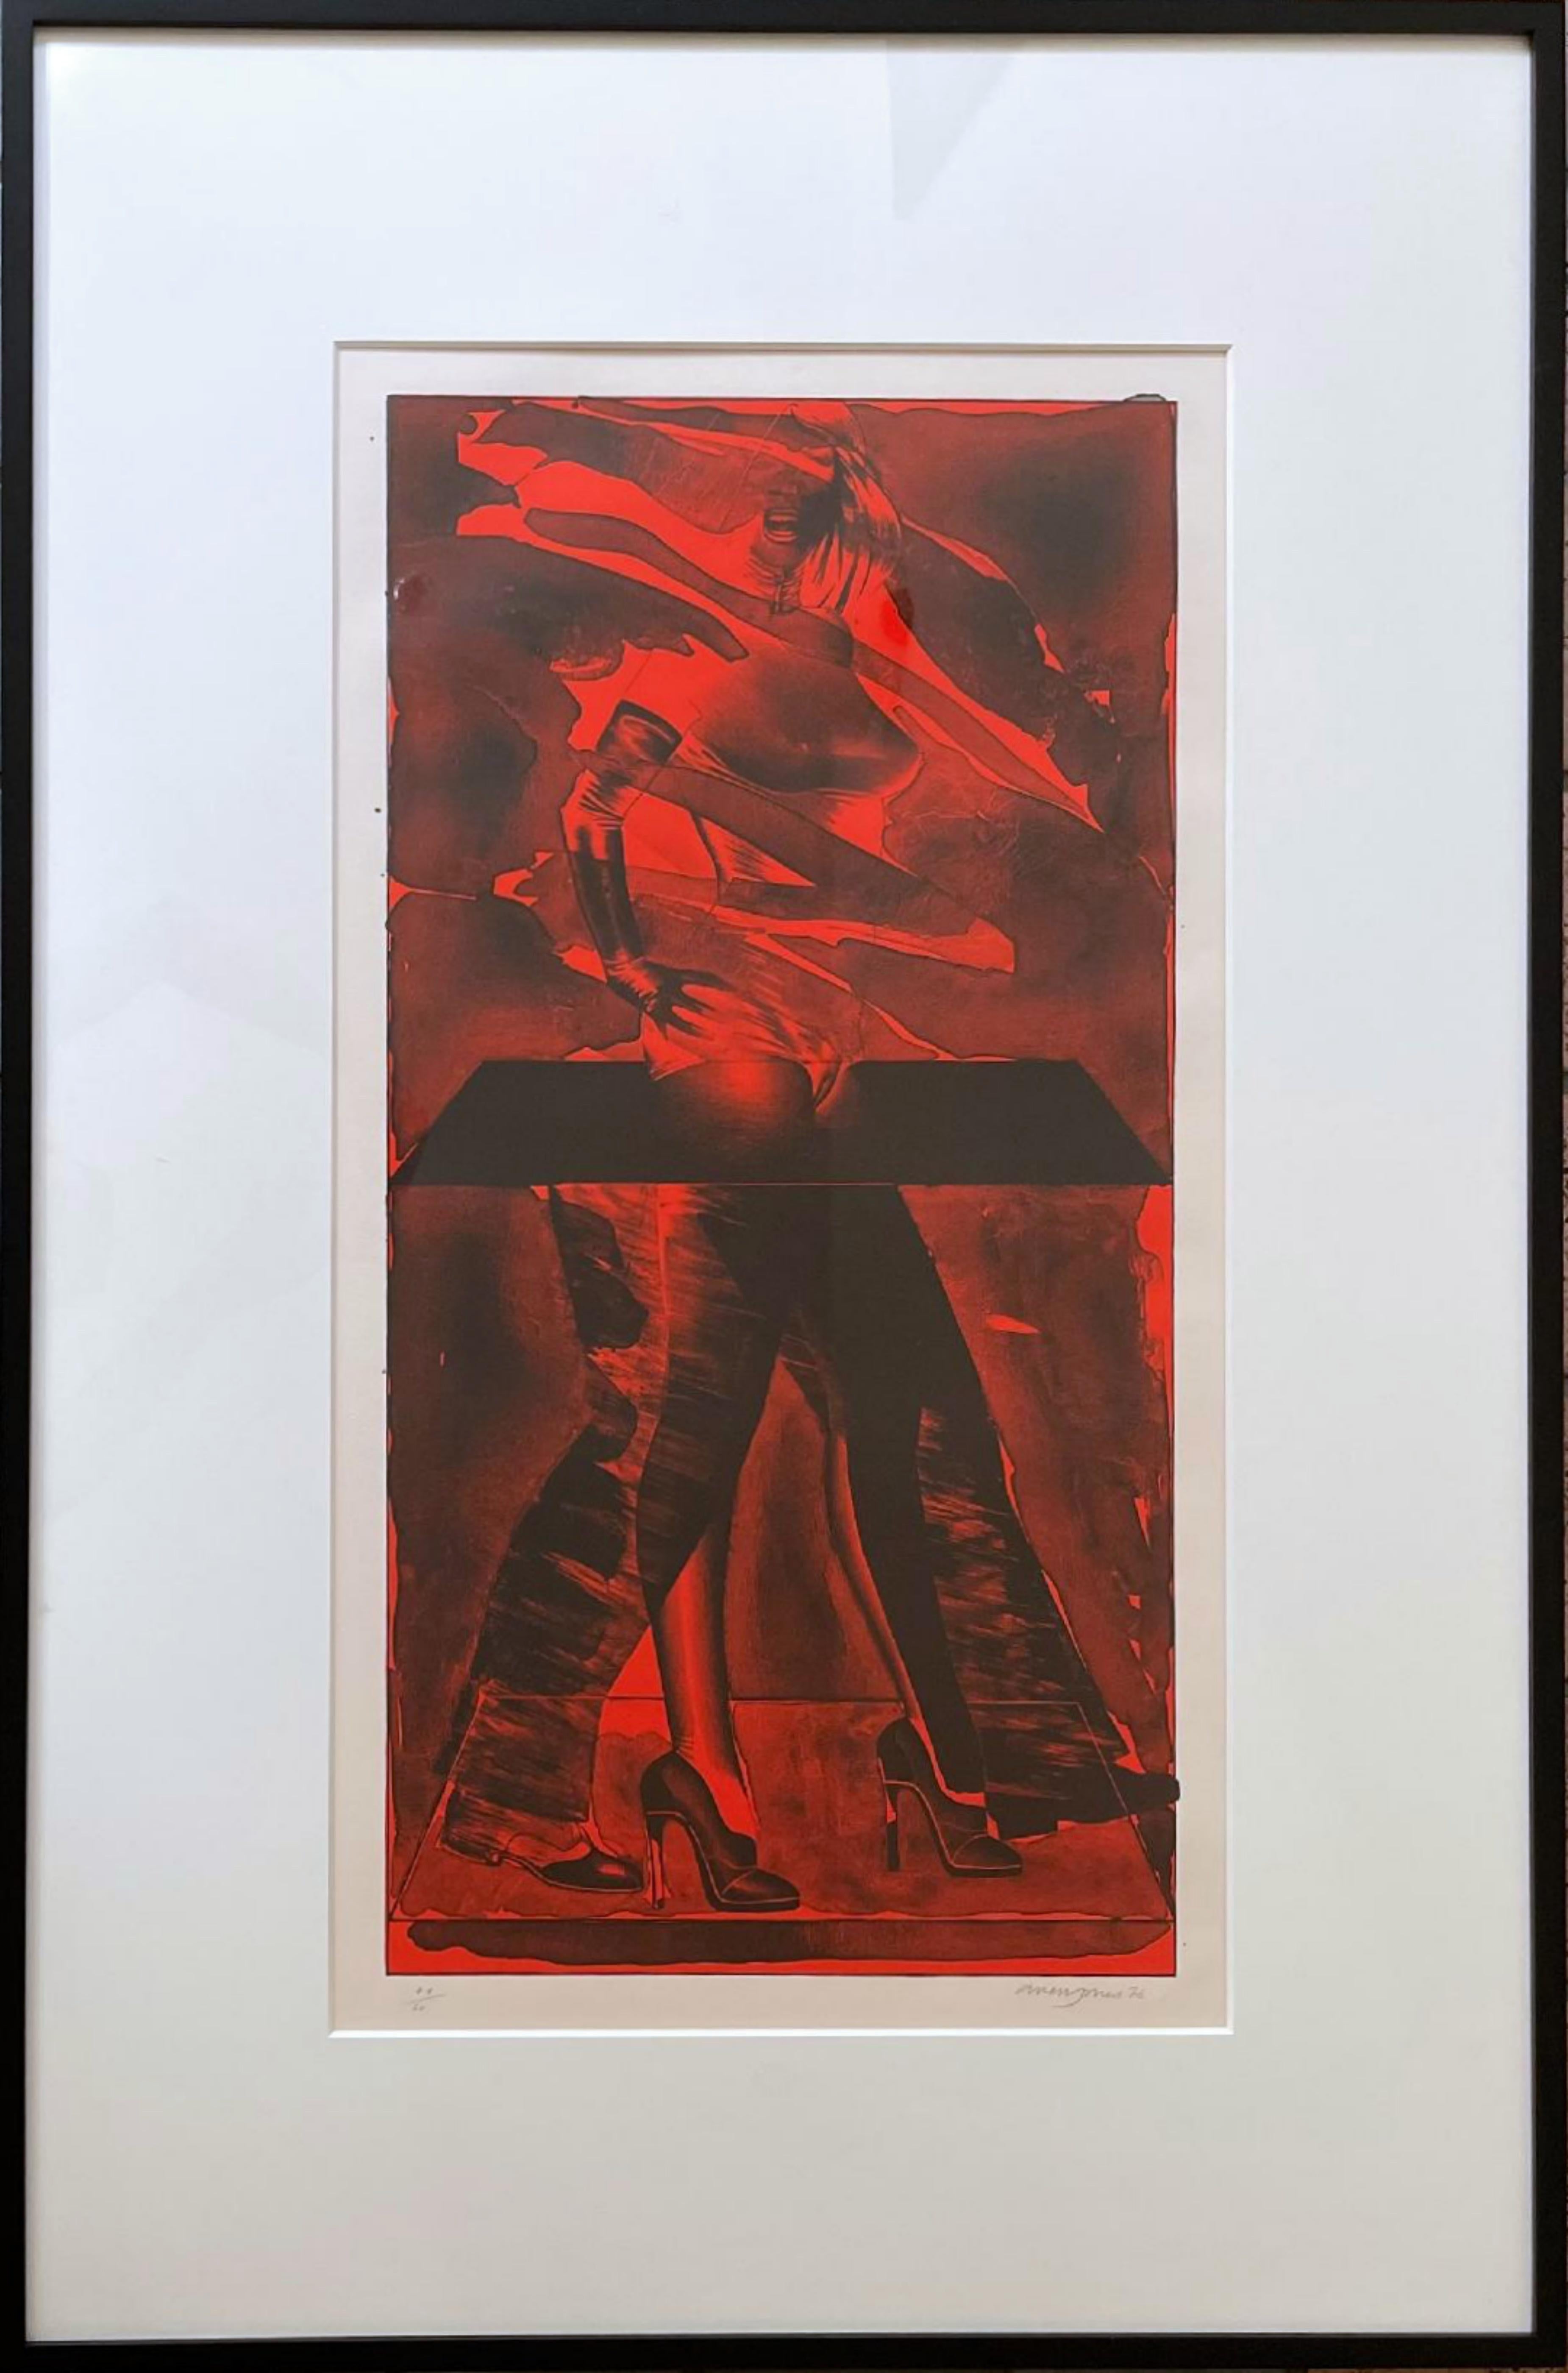 Red Feat (Lloyd, 73) Dramatic Lt Ed silkscreen by pioneering British Pop Artist - Print by Allen Jones